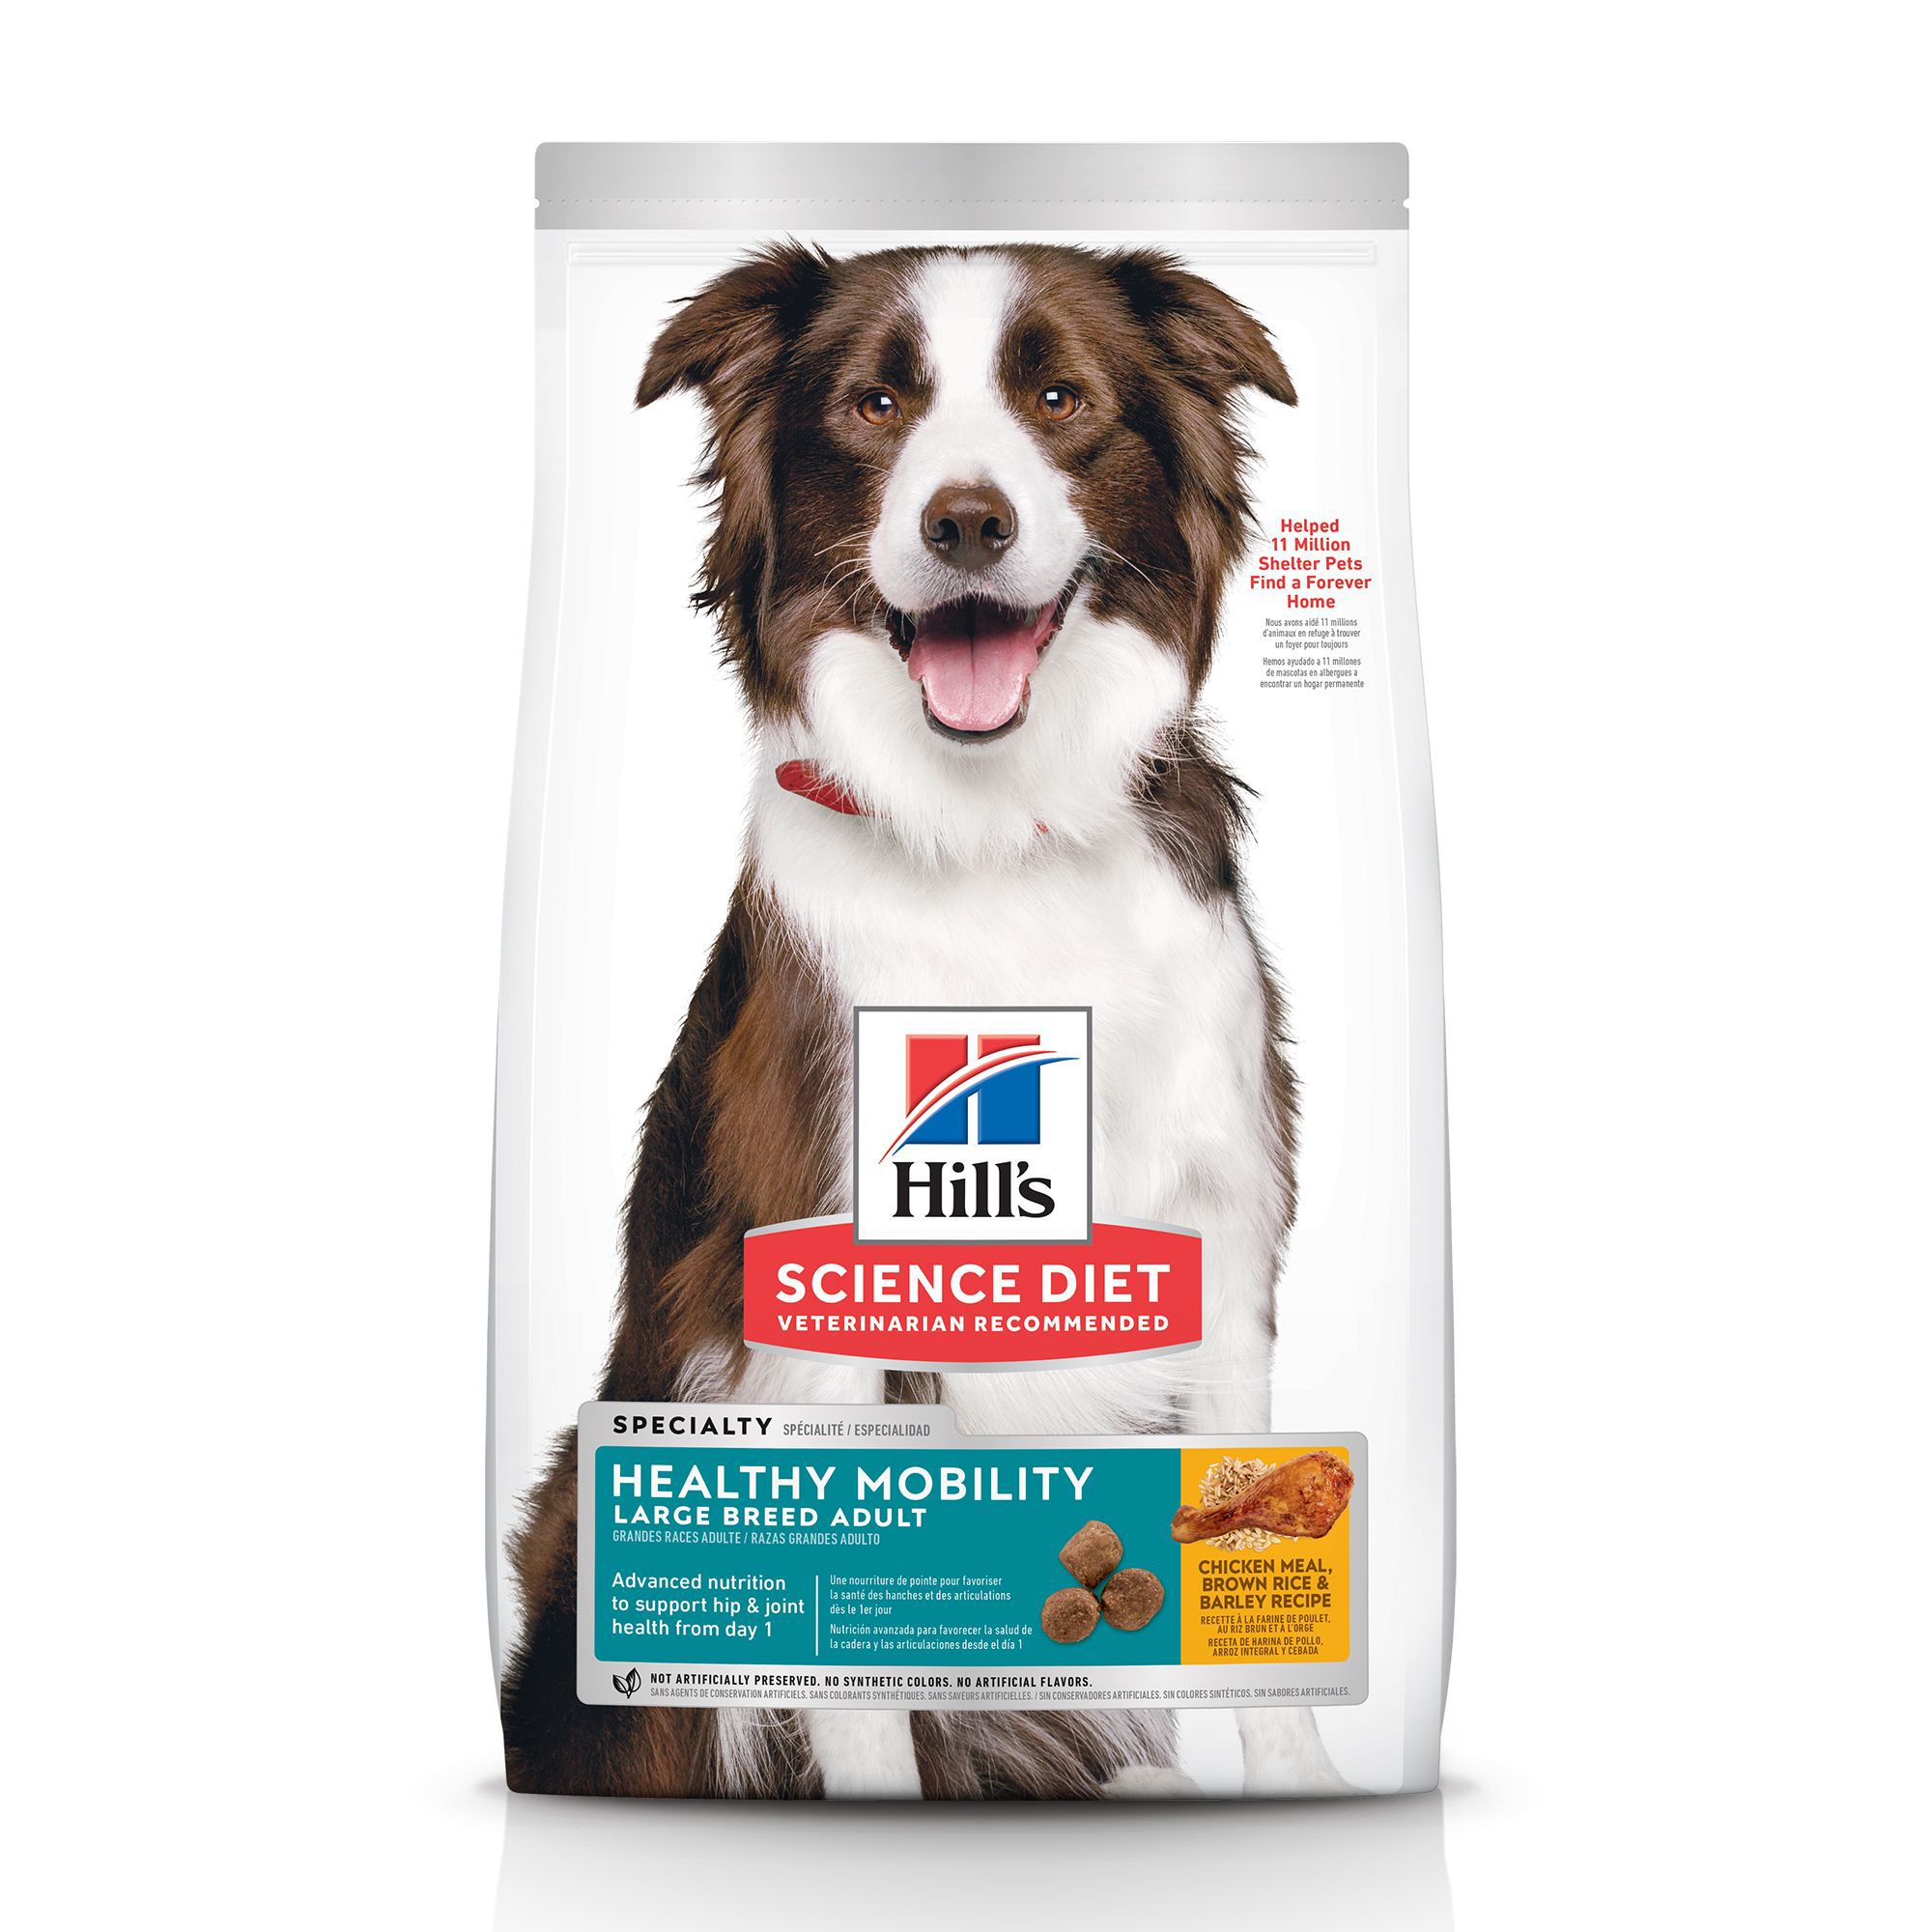 hills large breed dog food